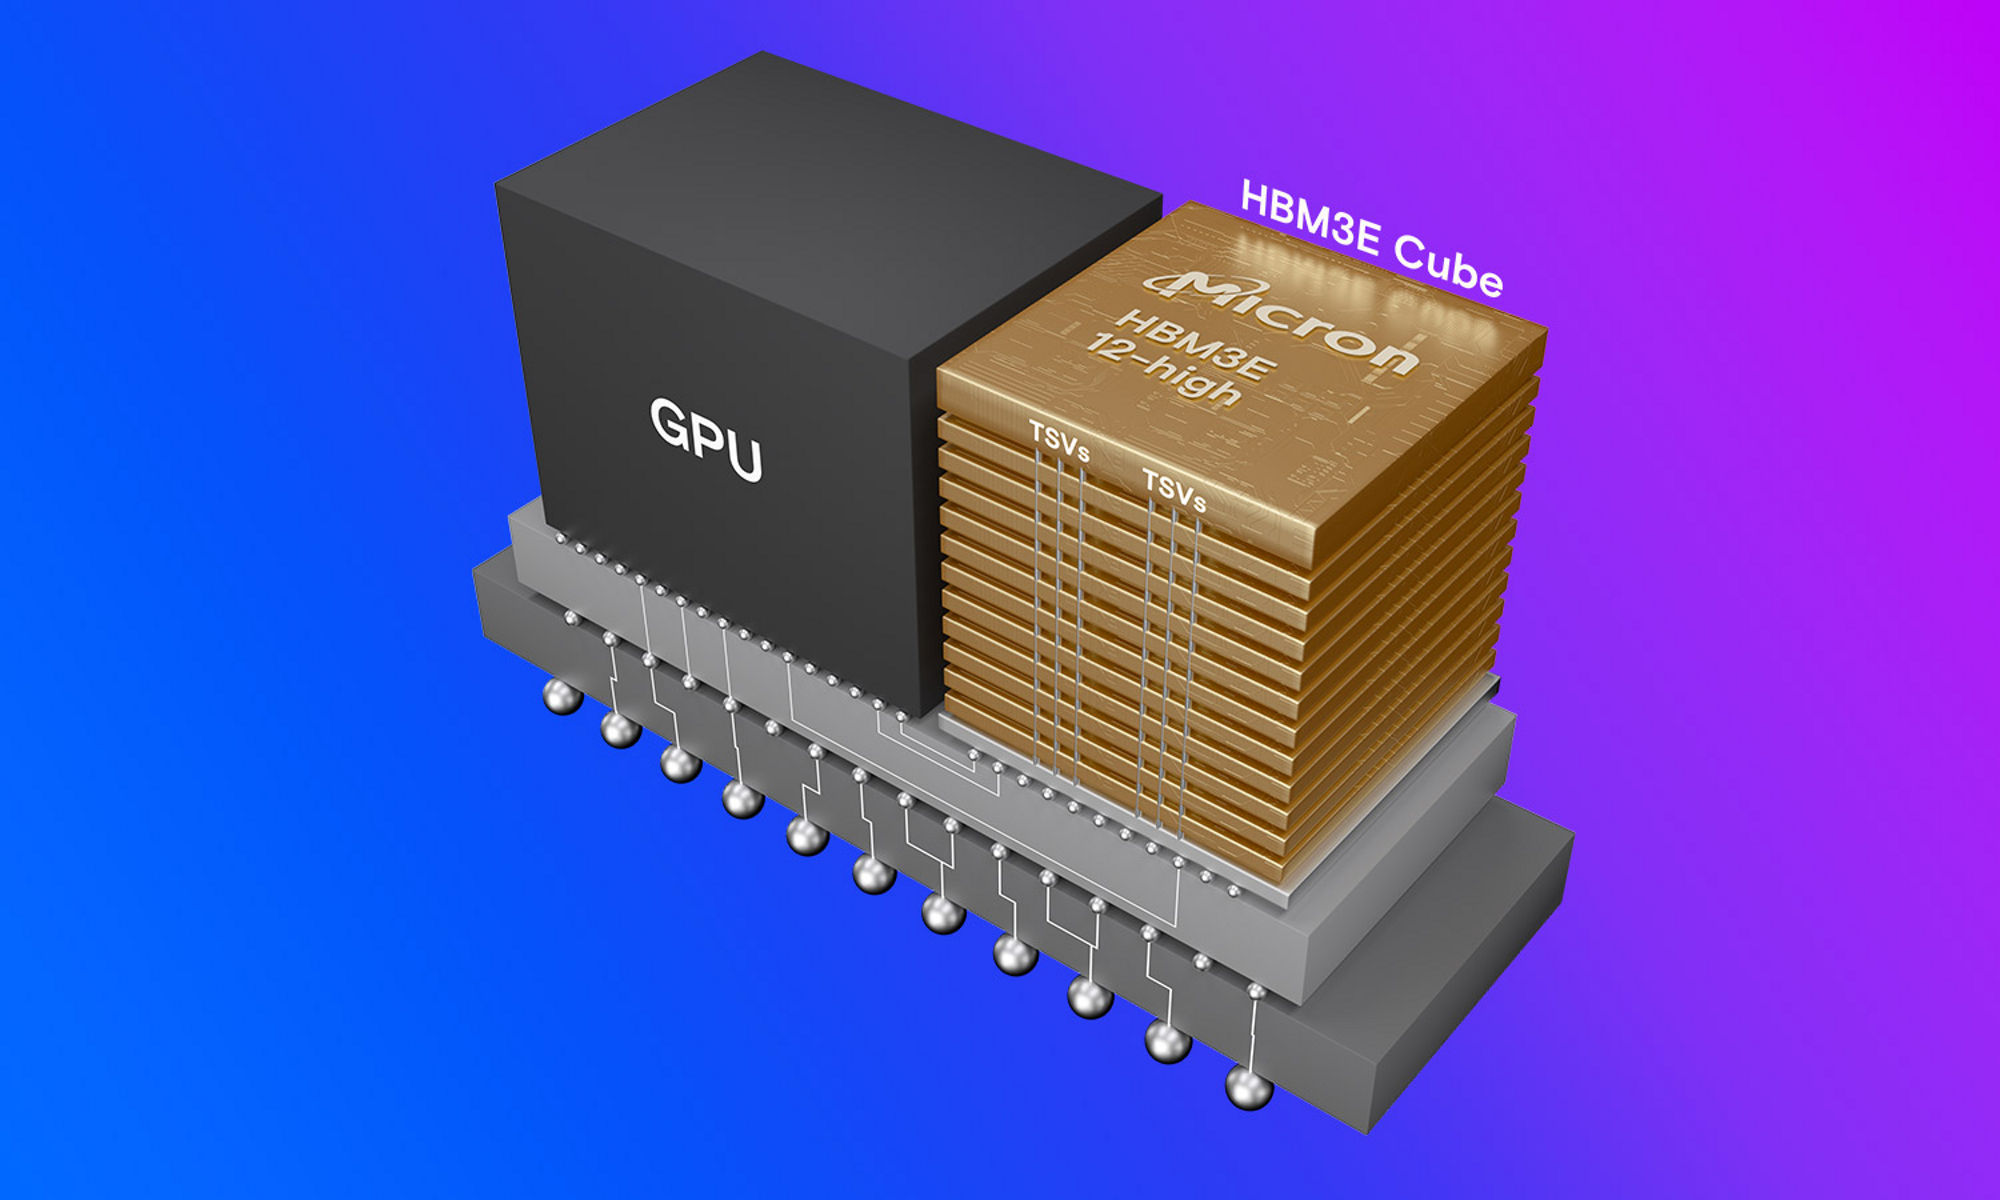 HBM3E 12-high 36GB cube